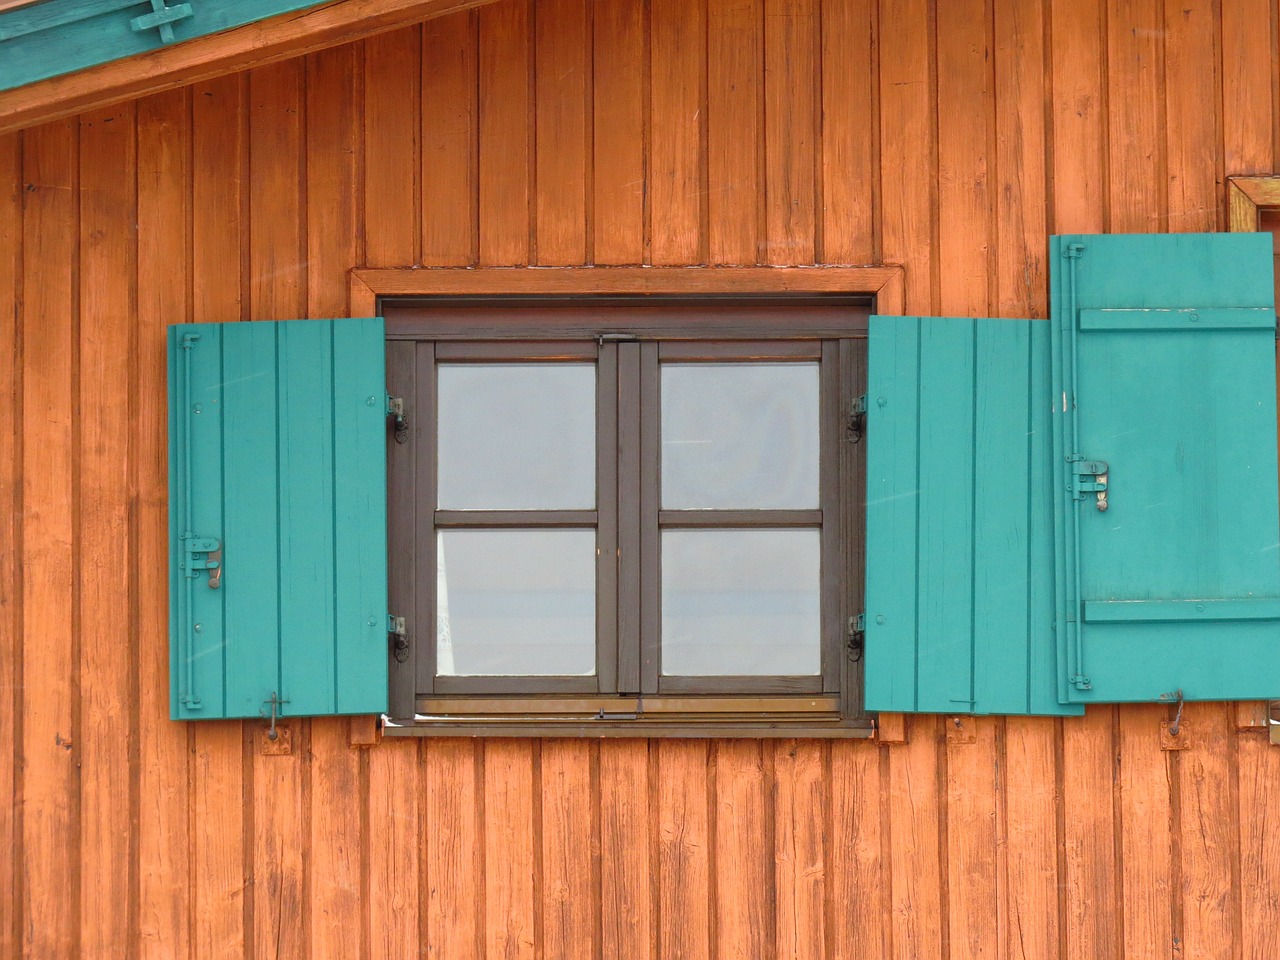 hut log cabin window free photo